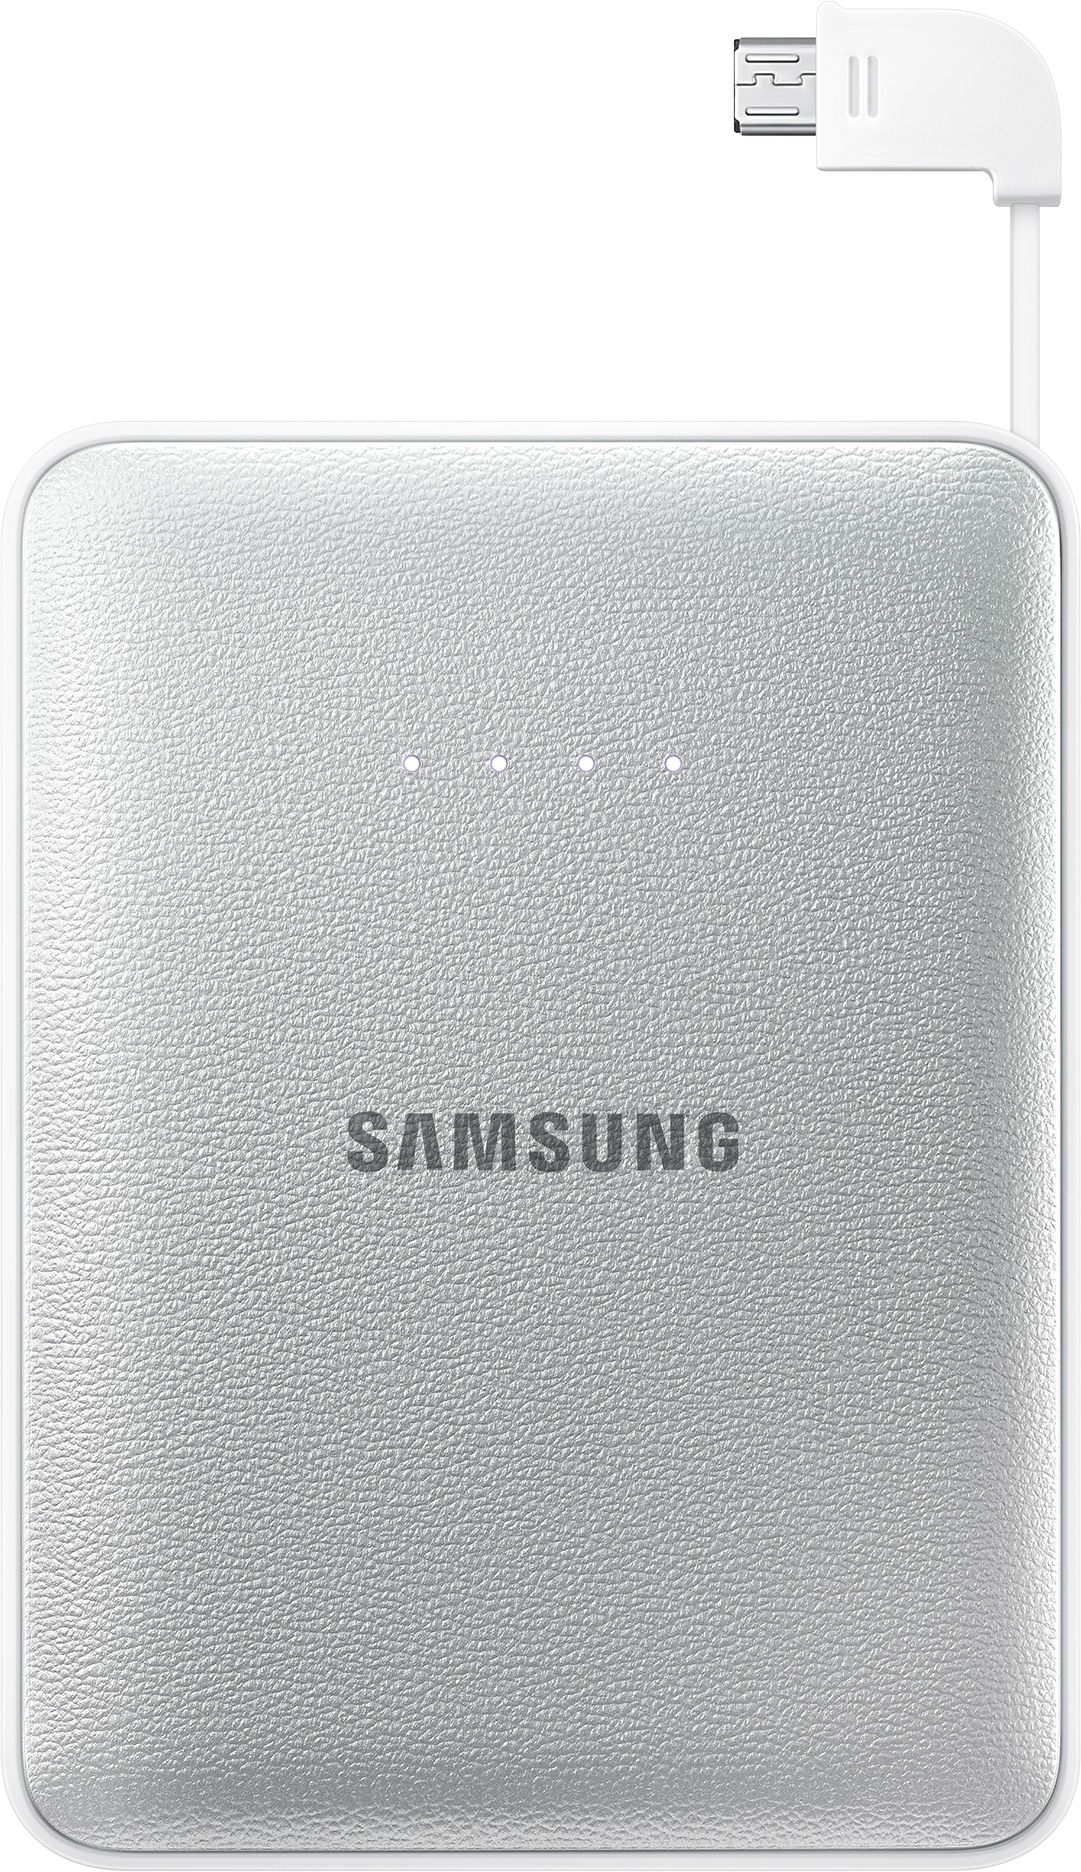 Samsung EB-PG850B 8400 mah